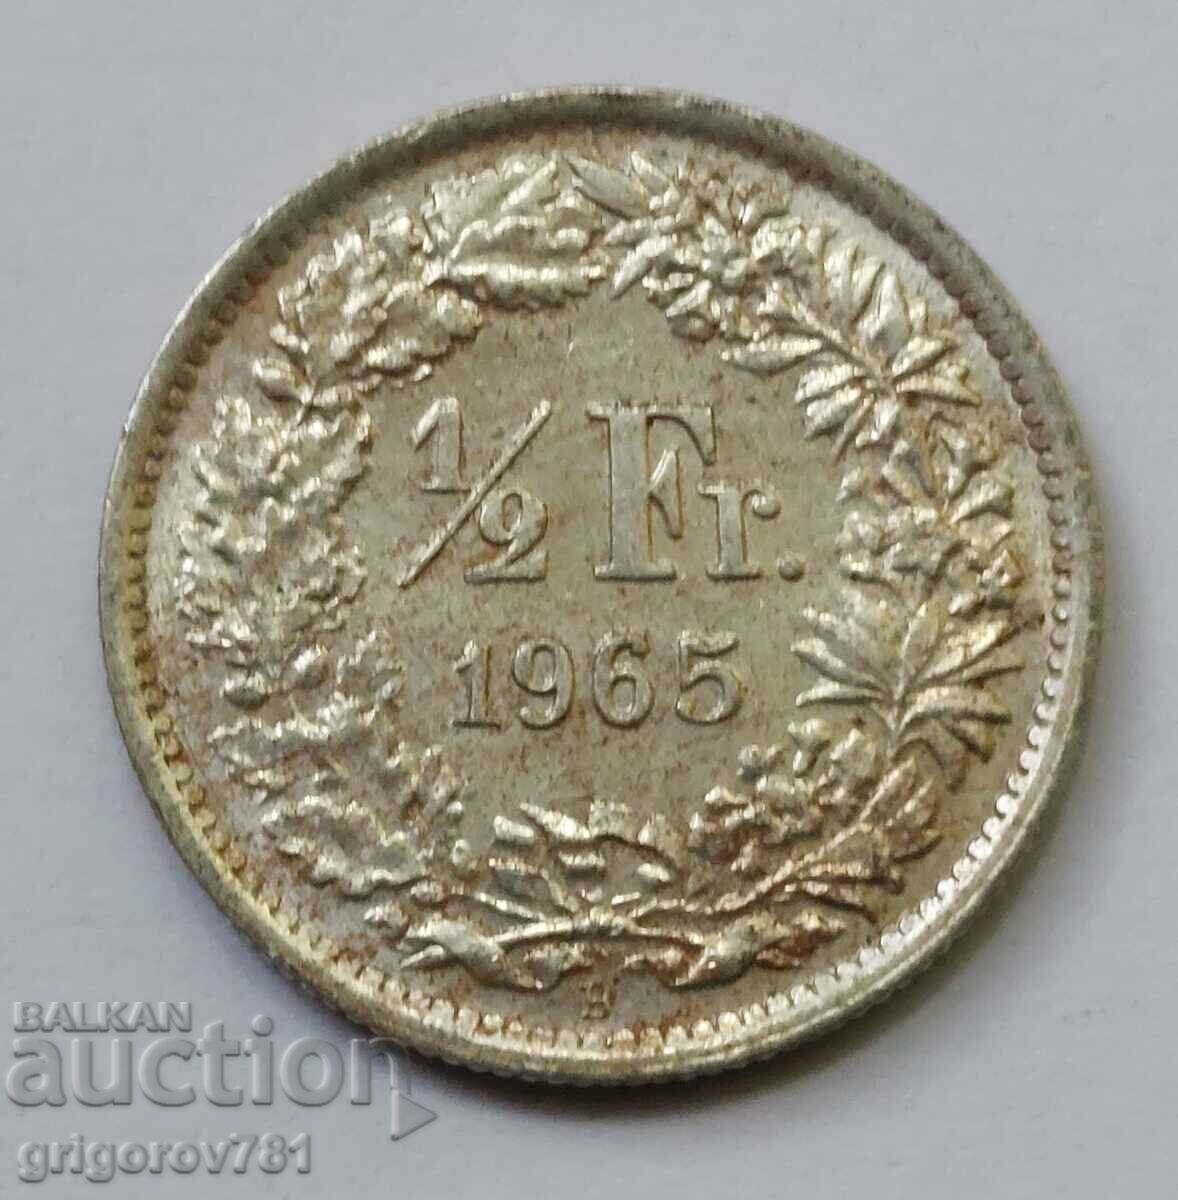 1/2 Franc Silver Switzerland 1965 B - Silver Coin #12